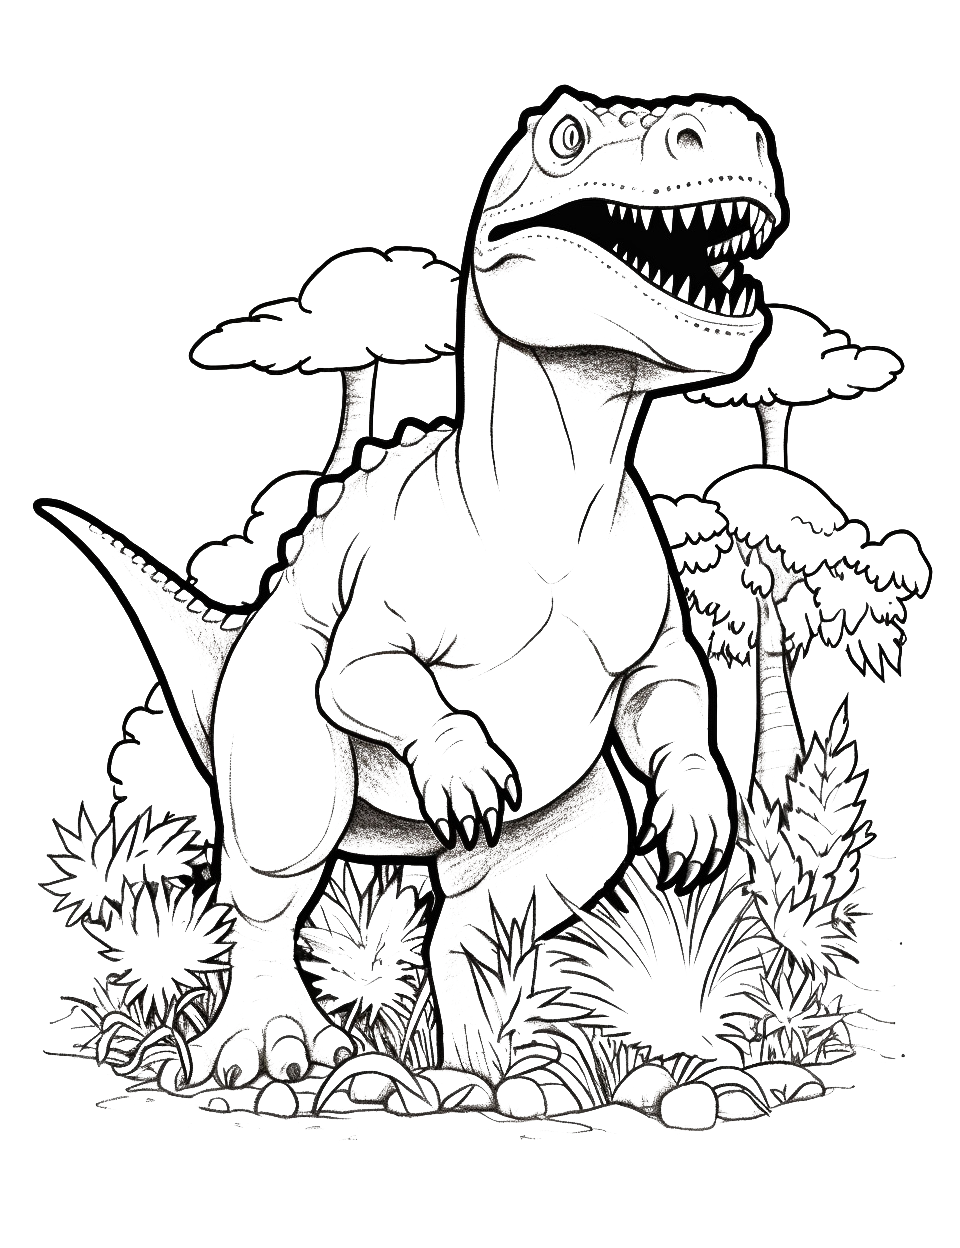 50 Dinosaur Coloring Pages: Free Printable Sheets